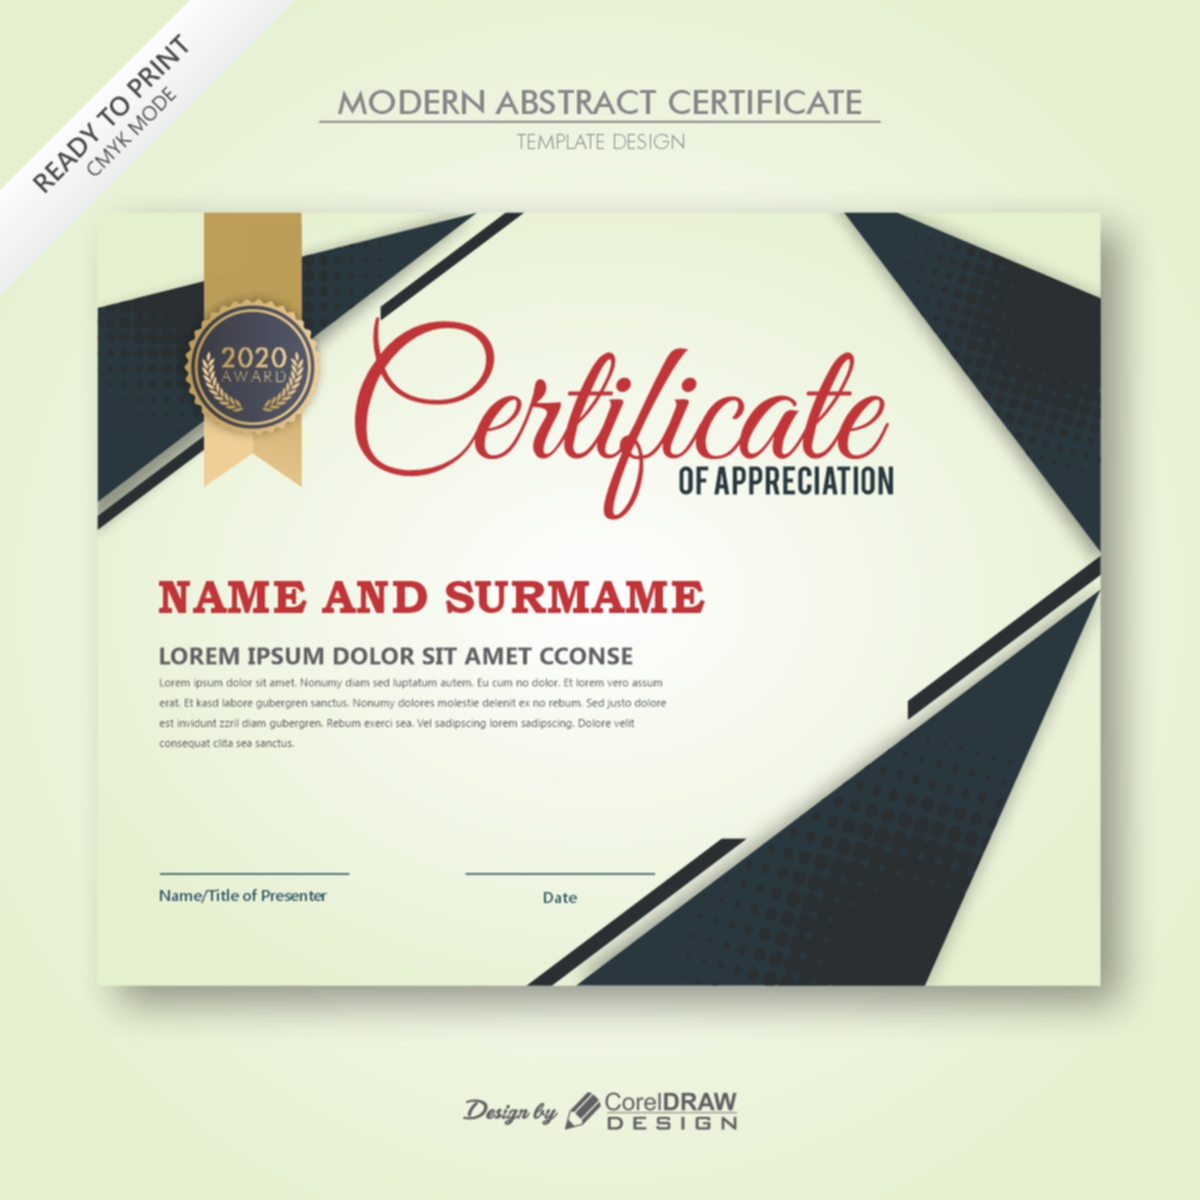 coreldraw certificate templates free download